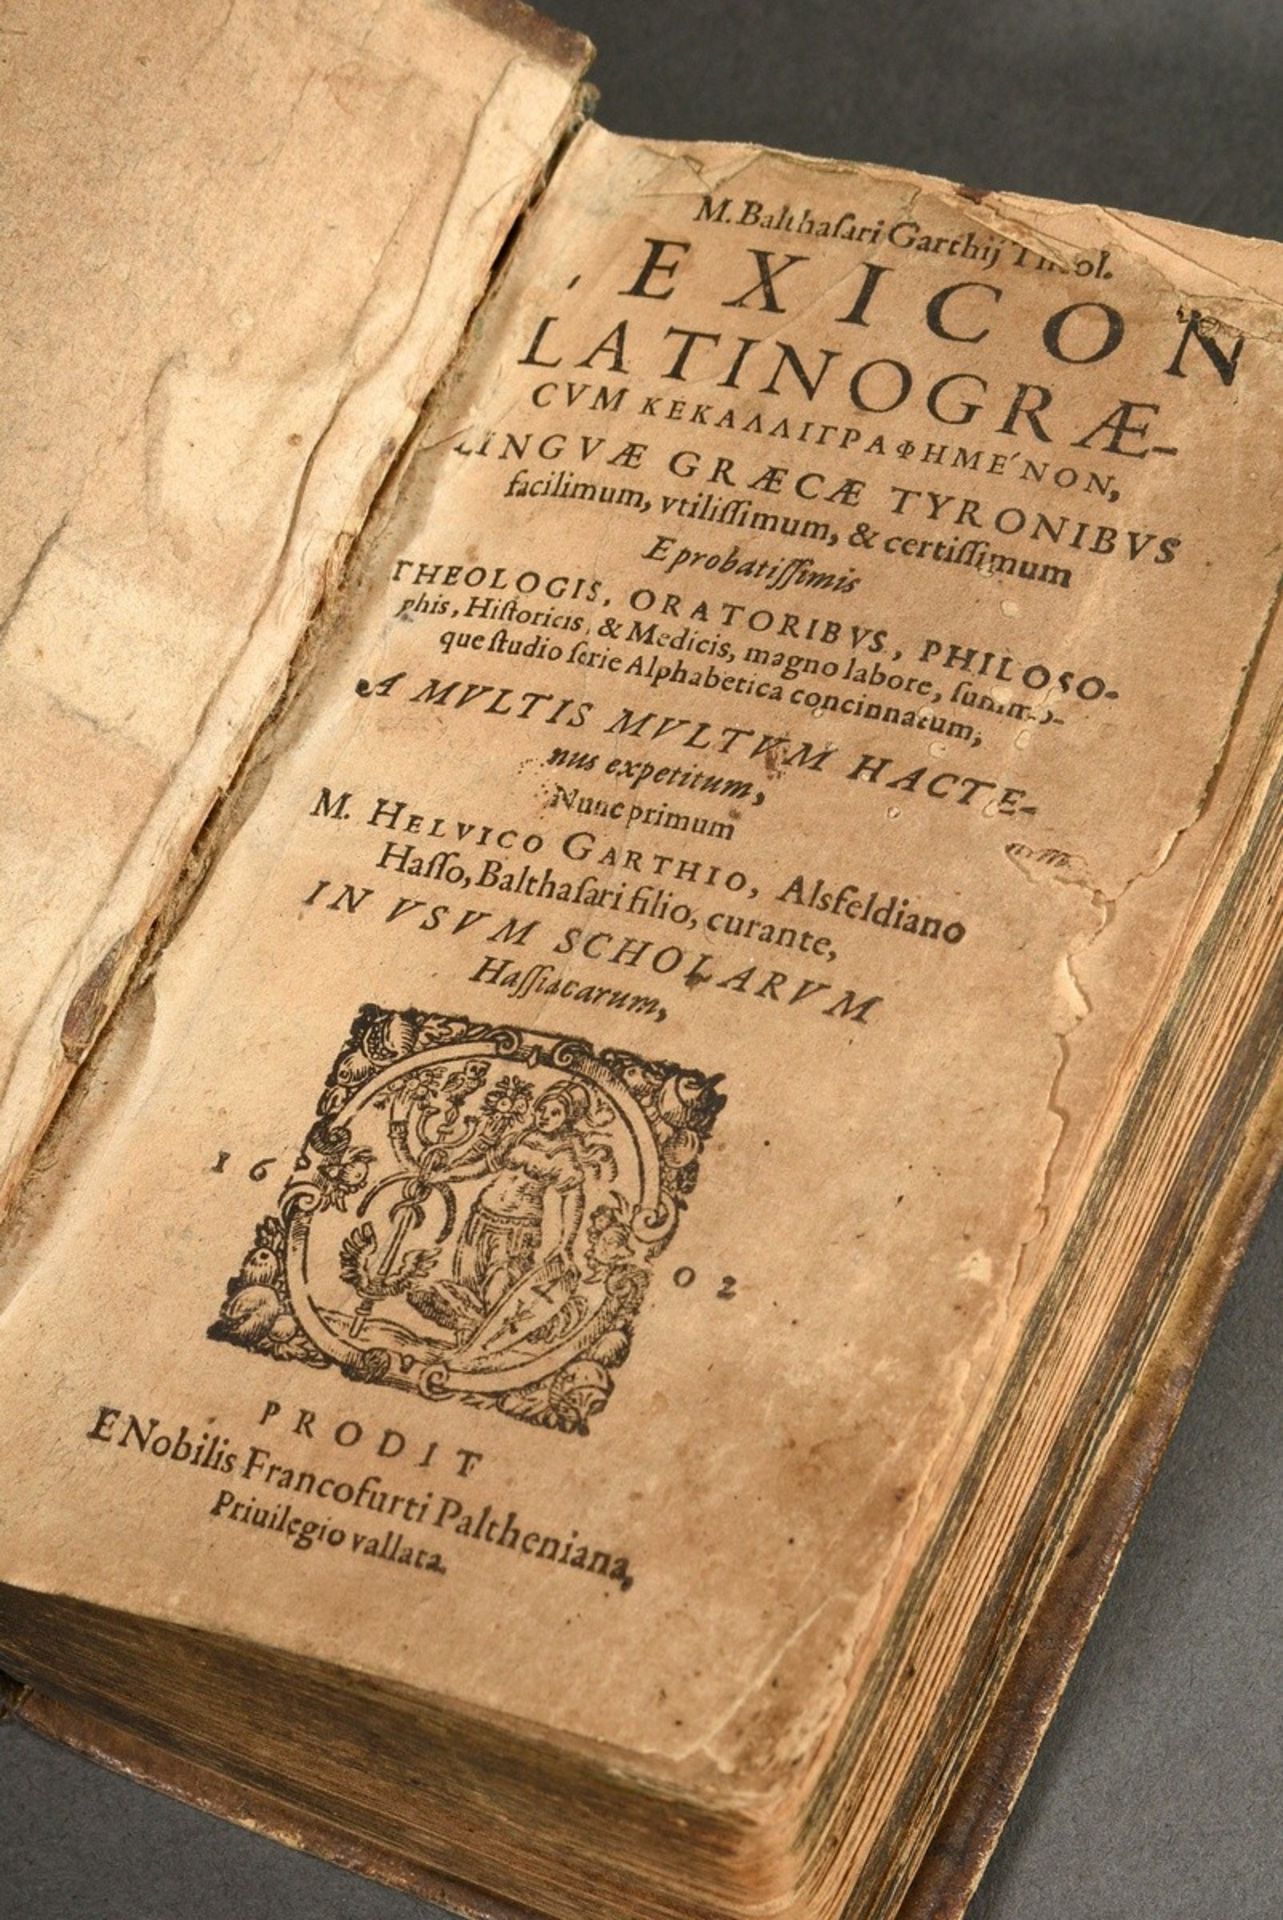 Band Garth, Balthasar (1550-1598) "Lexicon latino-graecum kekalligraphemenon, Linguae Graecae Tyron